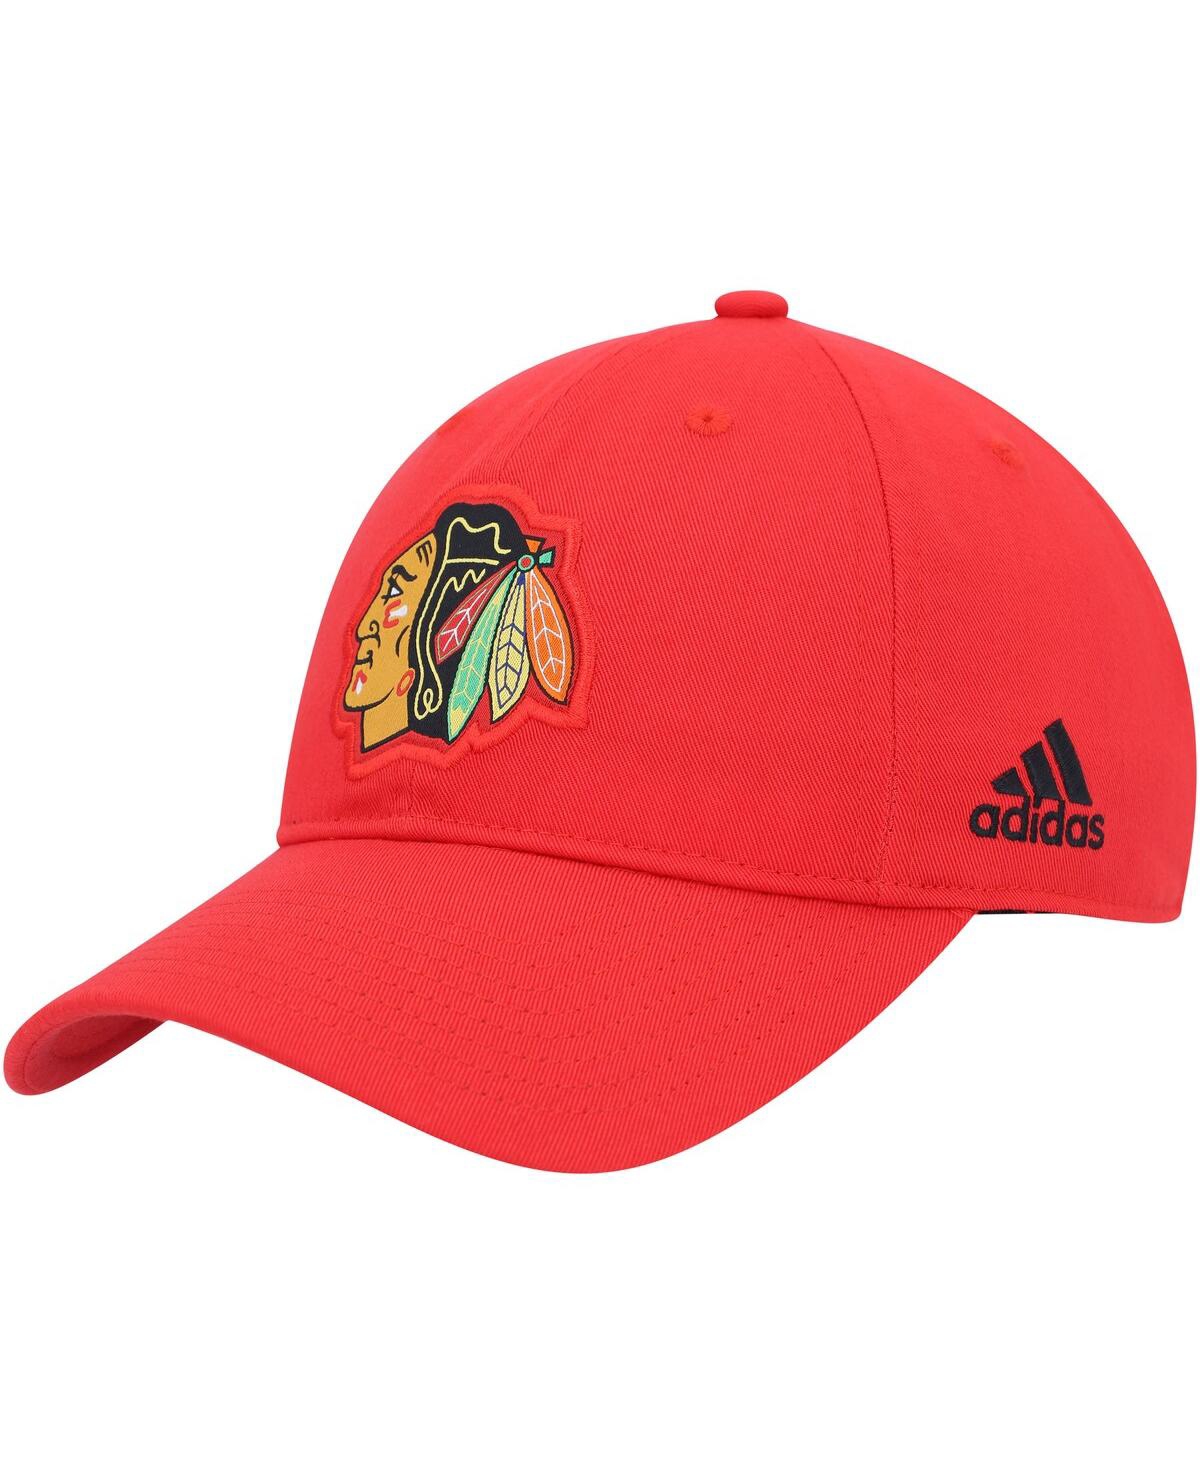 Adidas Originals Men's Adidas Red Chicago Blackhawks Primary Logo Slouch Adjustable Hat